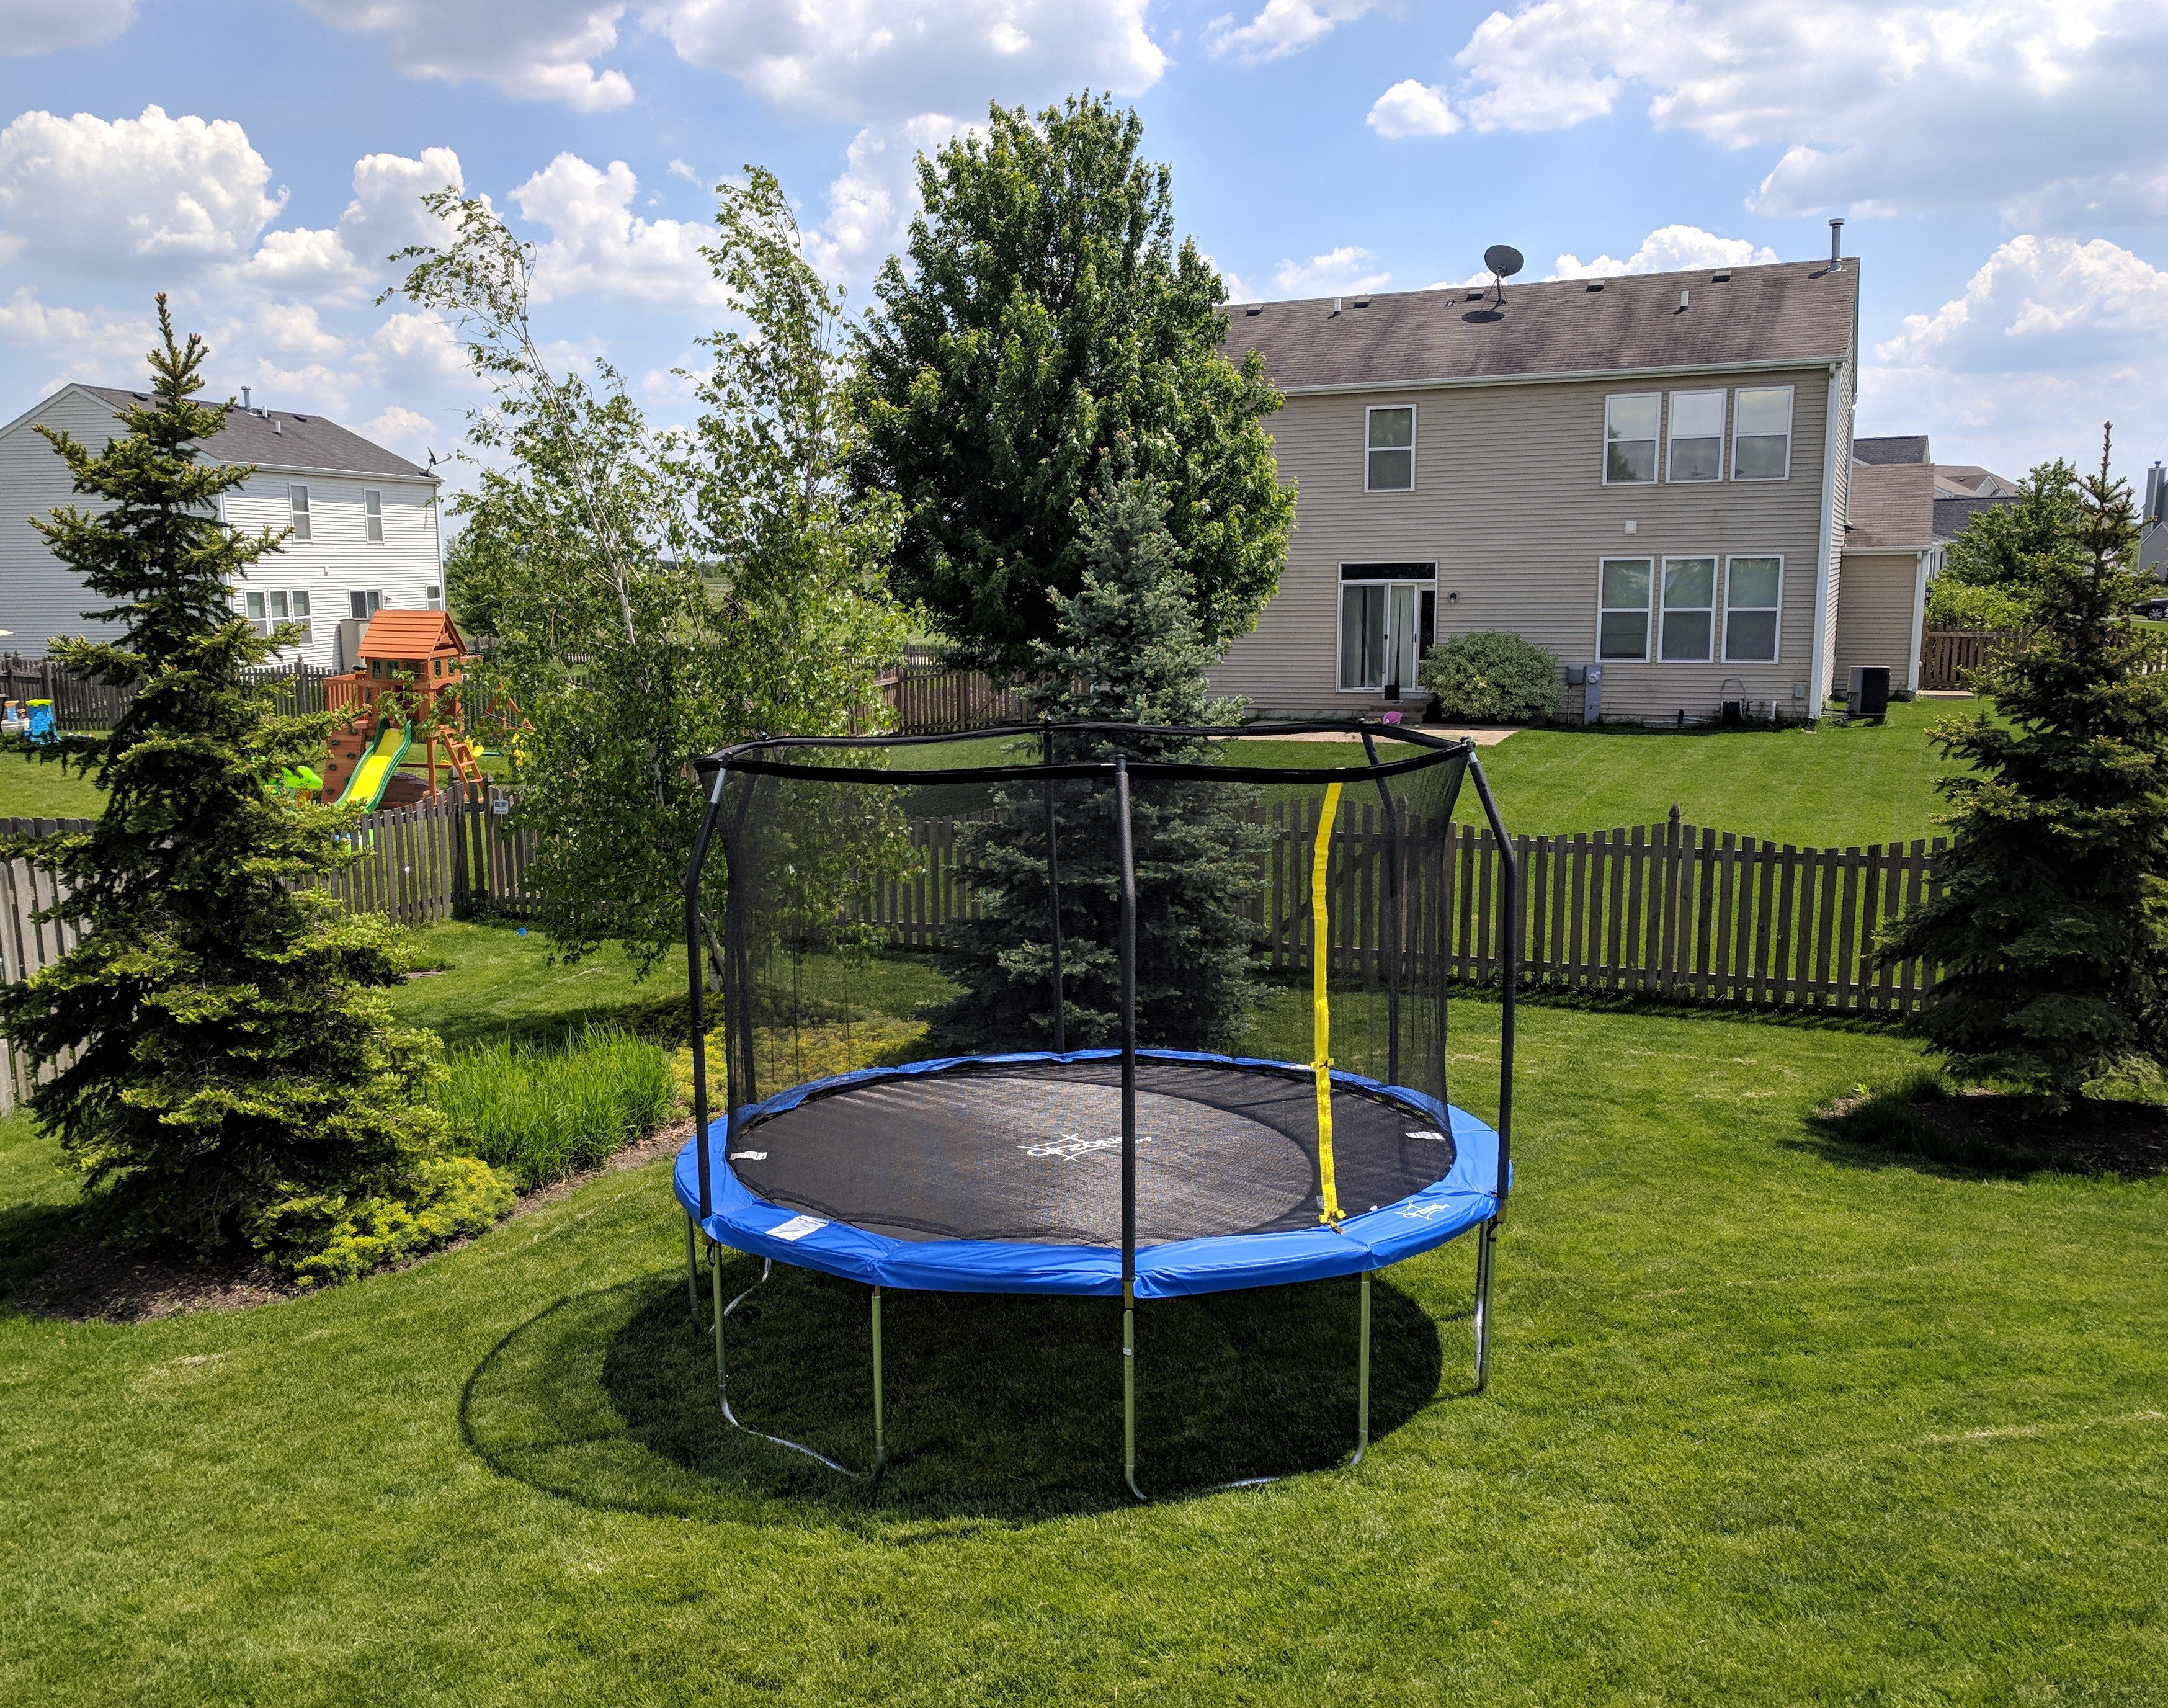 A 15 ft Backyard Jump Round Trampoline in a backyard.